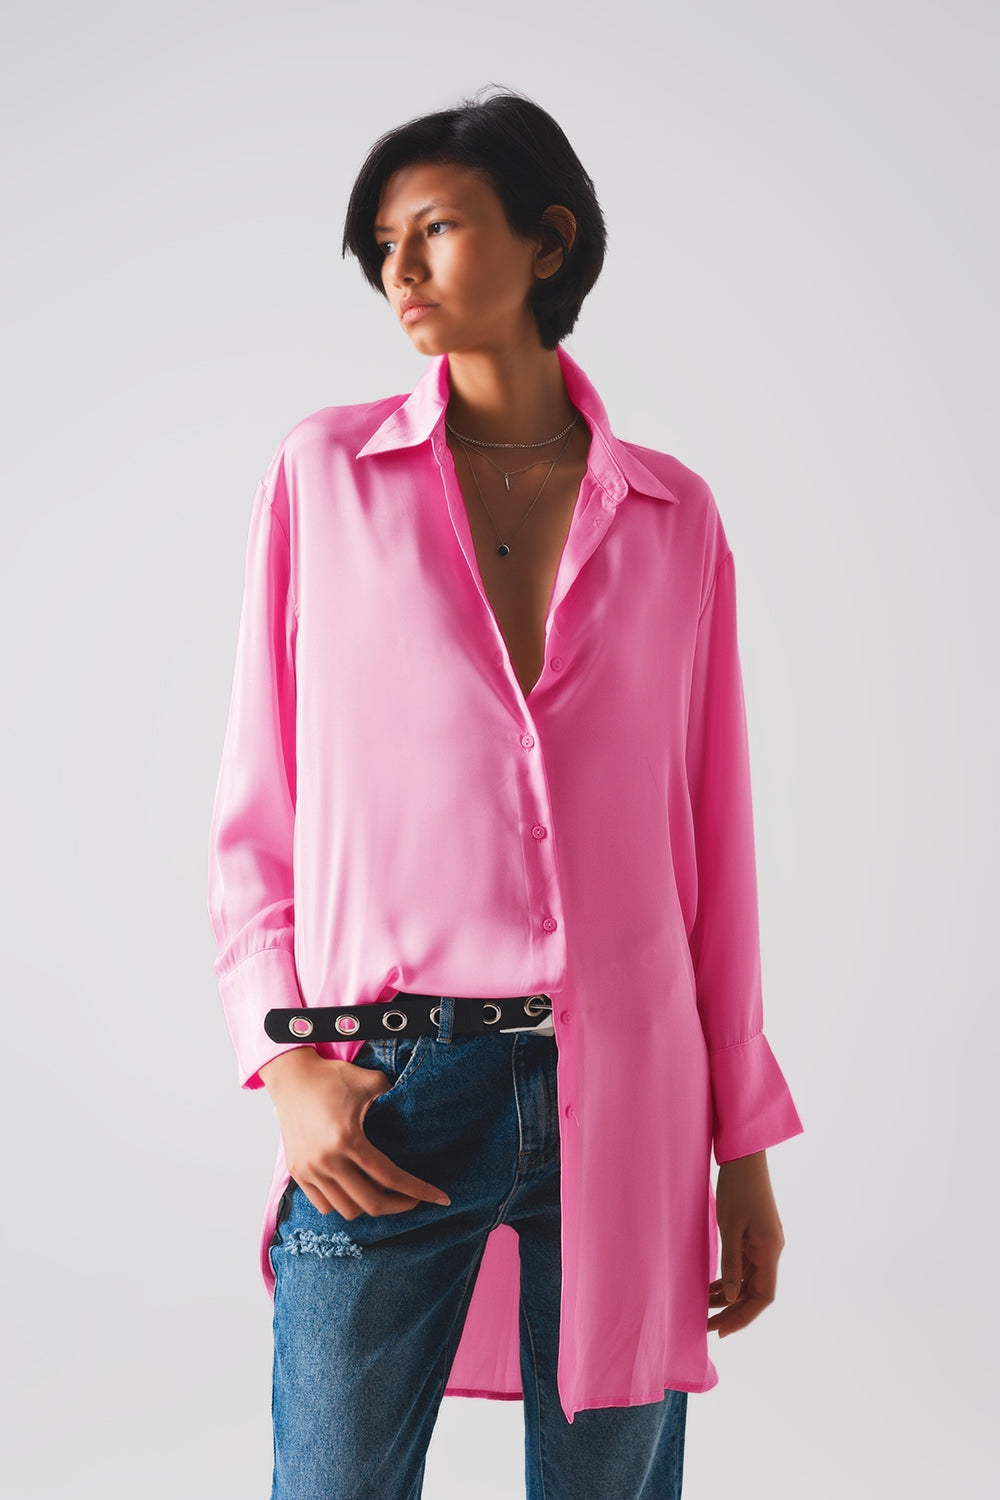 Q2 Camisa de botão de manga comprida de cetim rosa